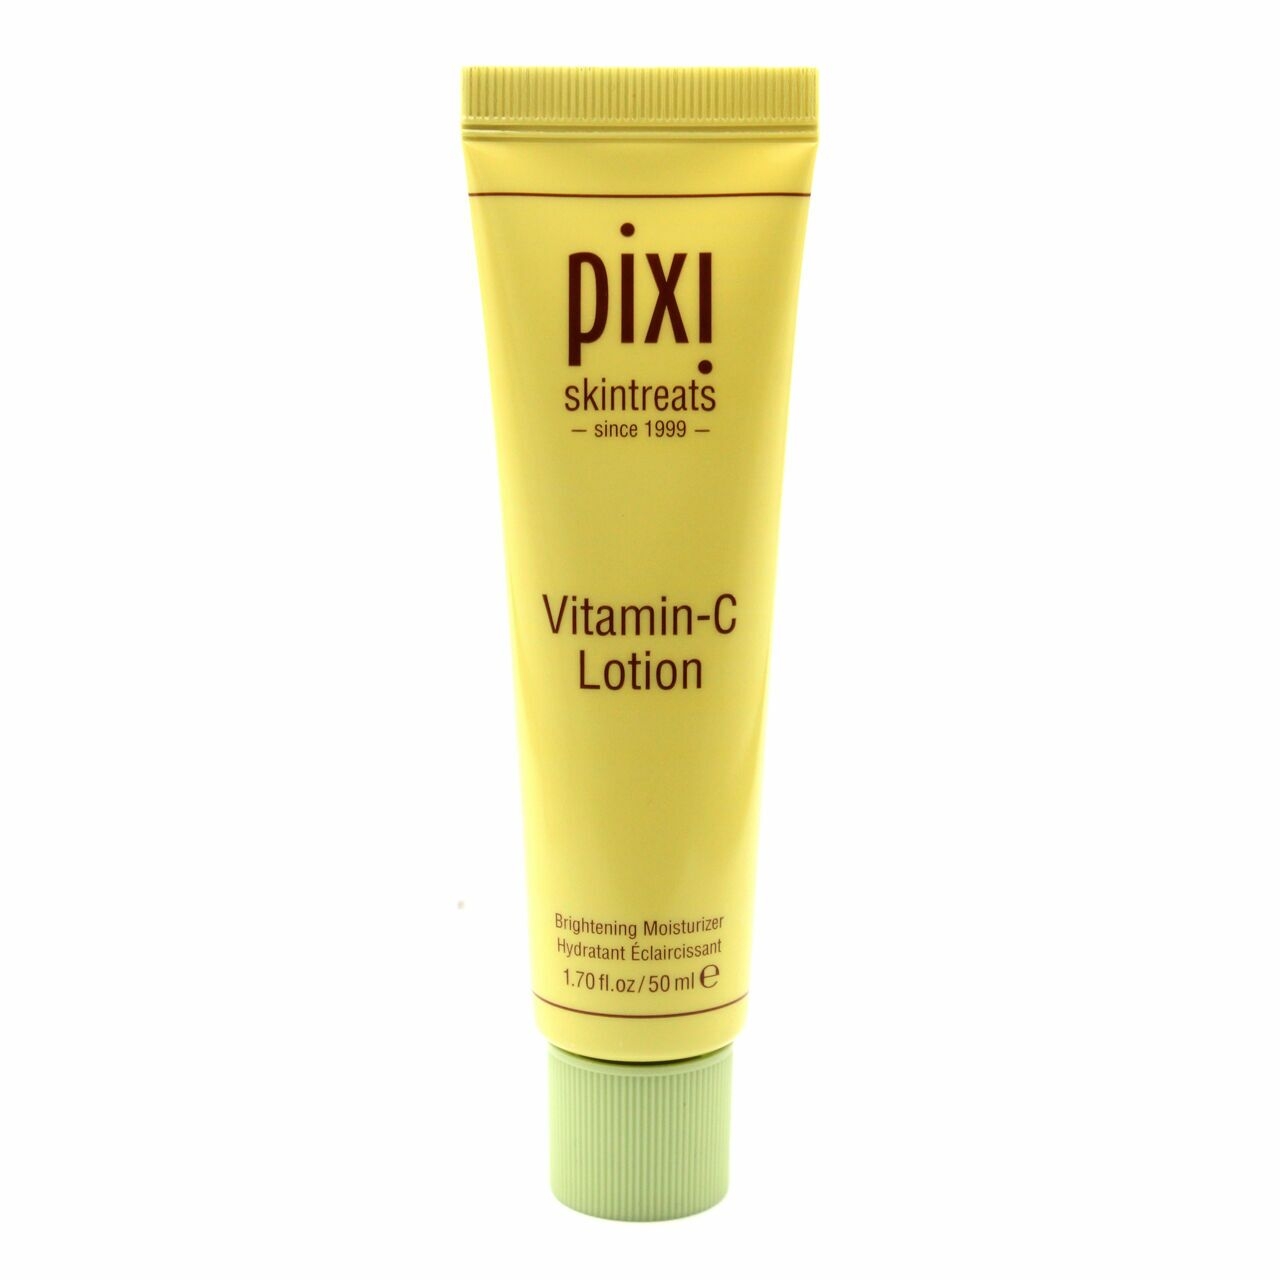 Pixi Vitamin-C Lotion Skin Care